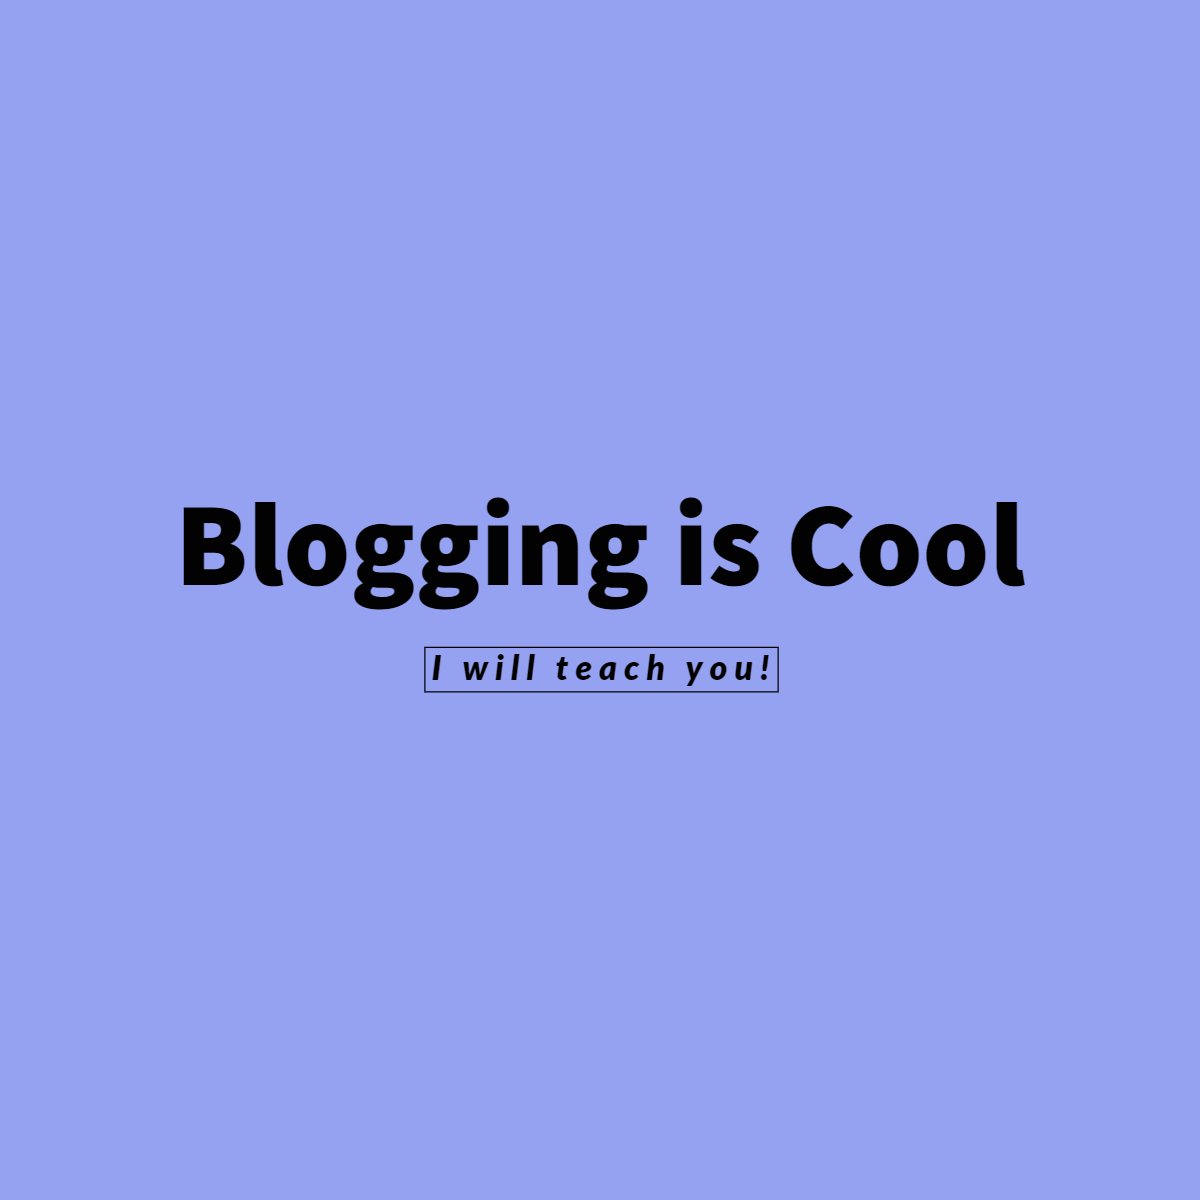 bloggingiscool.com why set up a Ping List